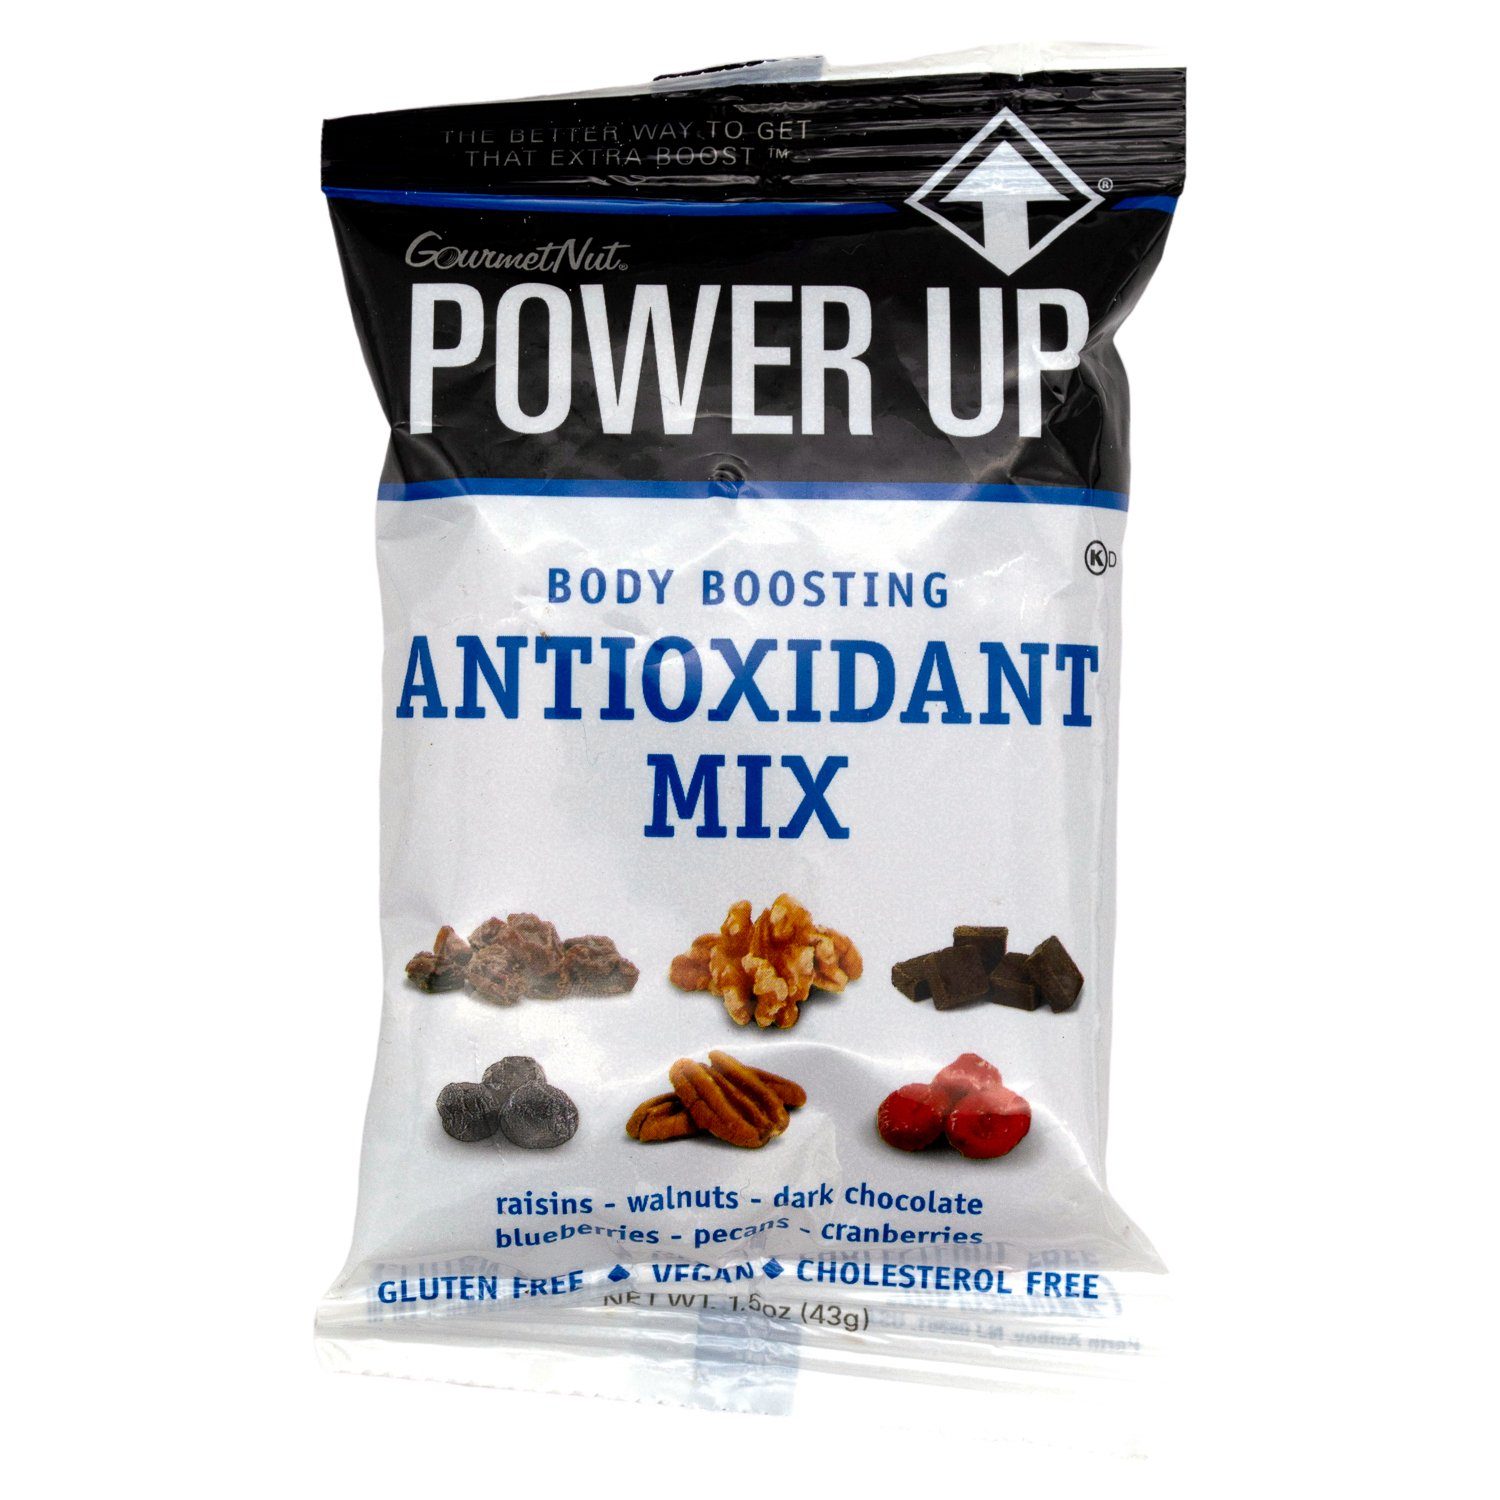 Power Up Trail Mix Gourmet Nut Antioxidant Mix 1.5 Ounce 